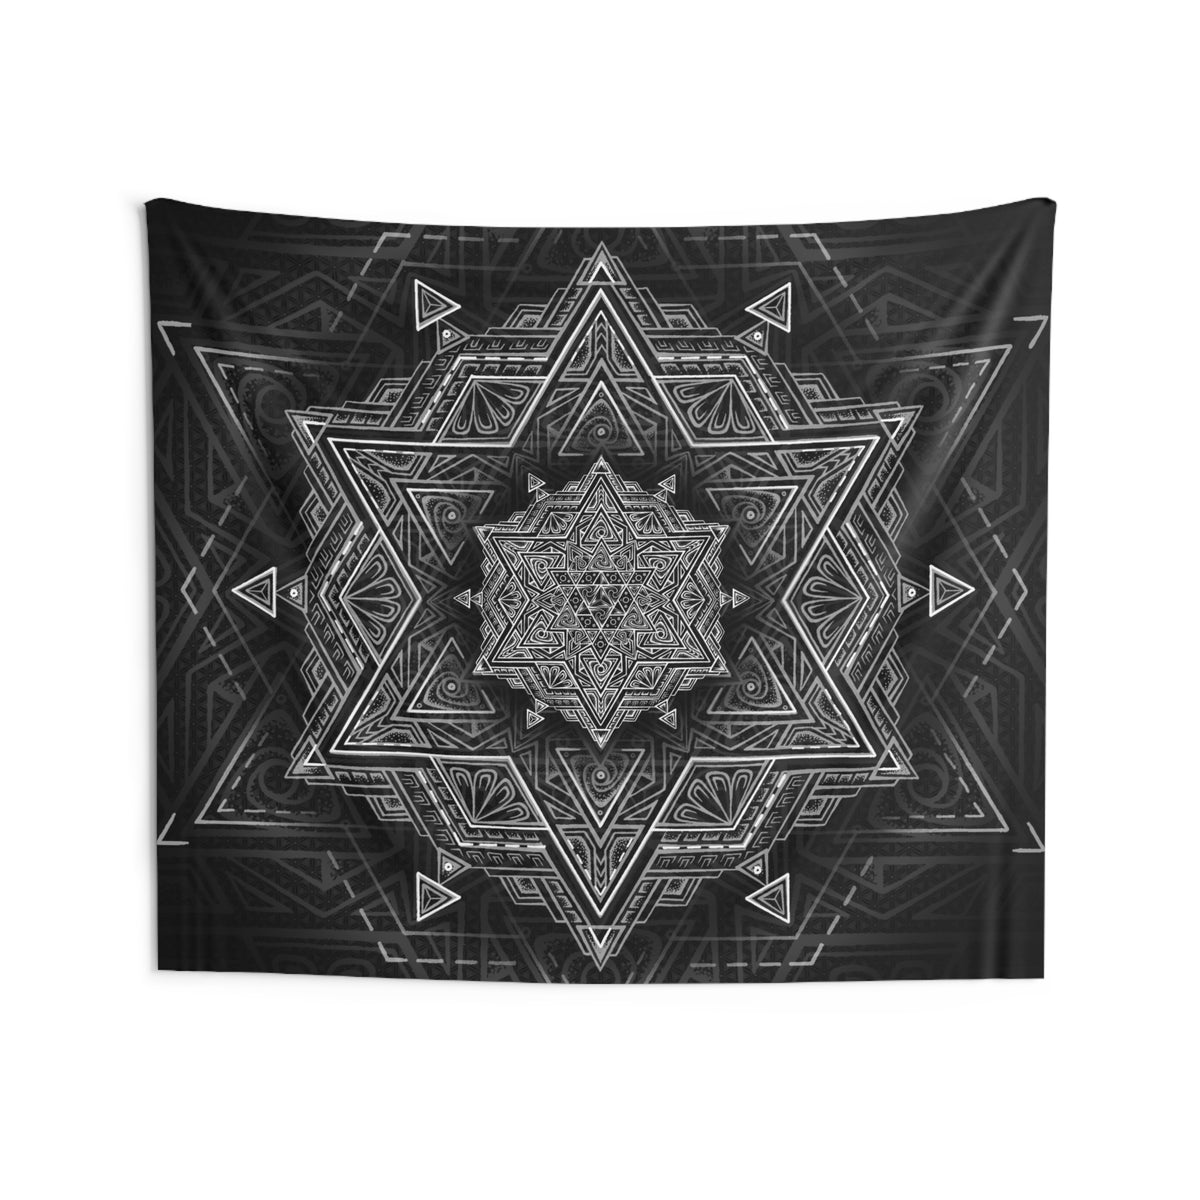 Star Tetrahedron Mandala - Wall Tapestry